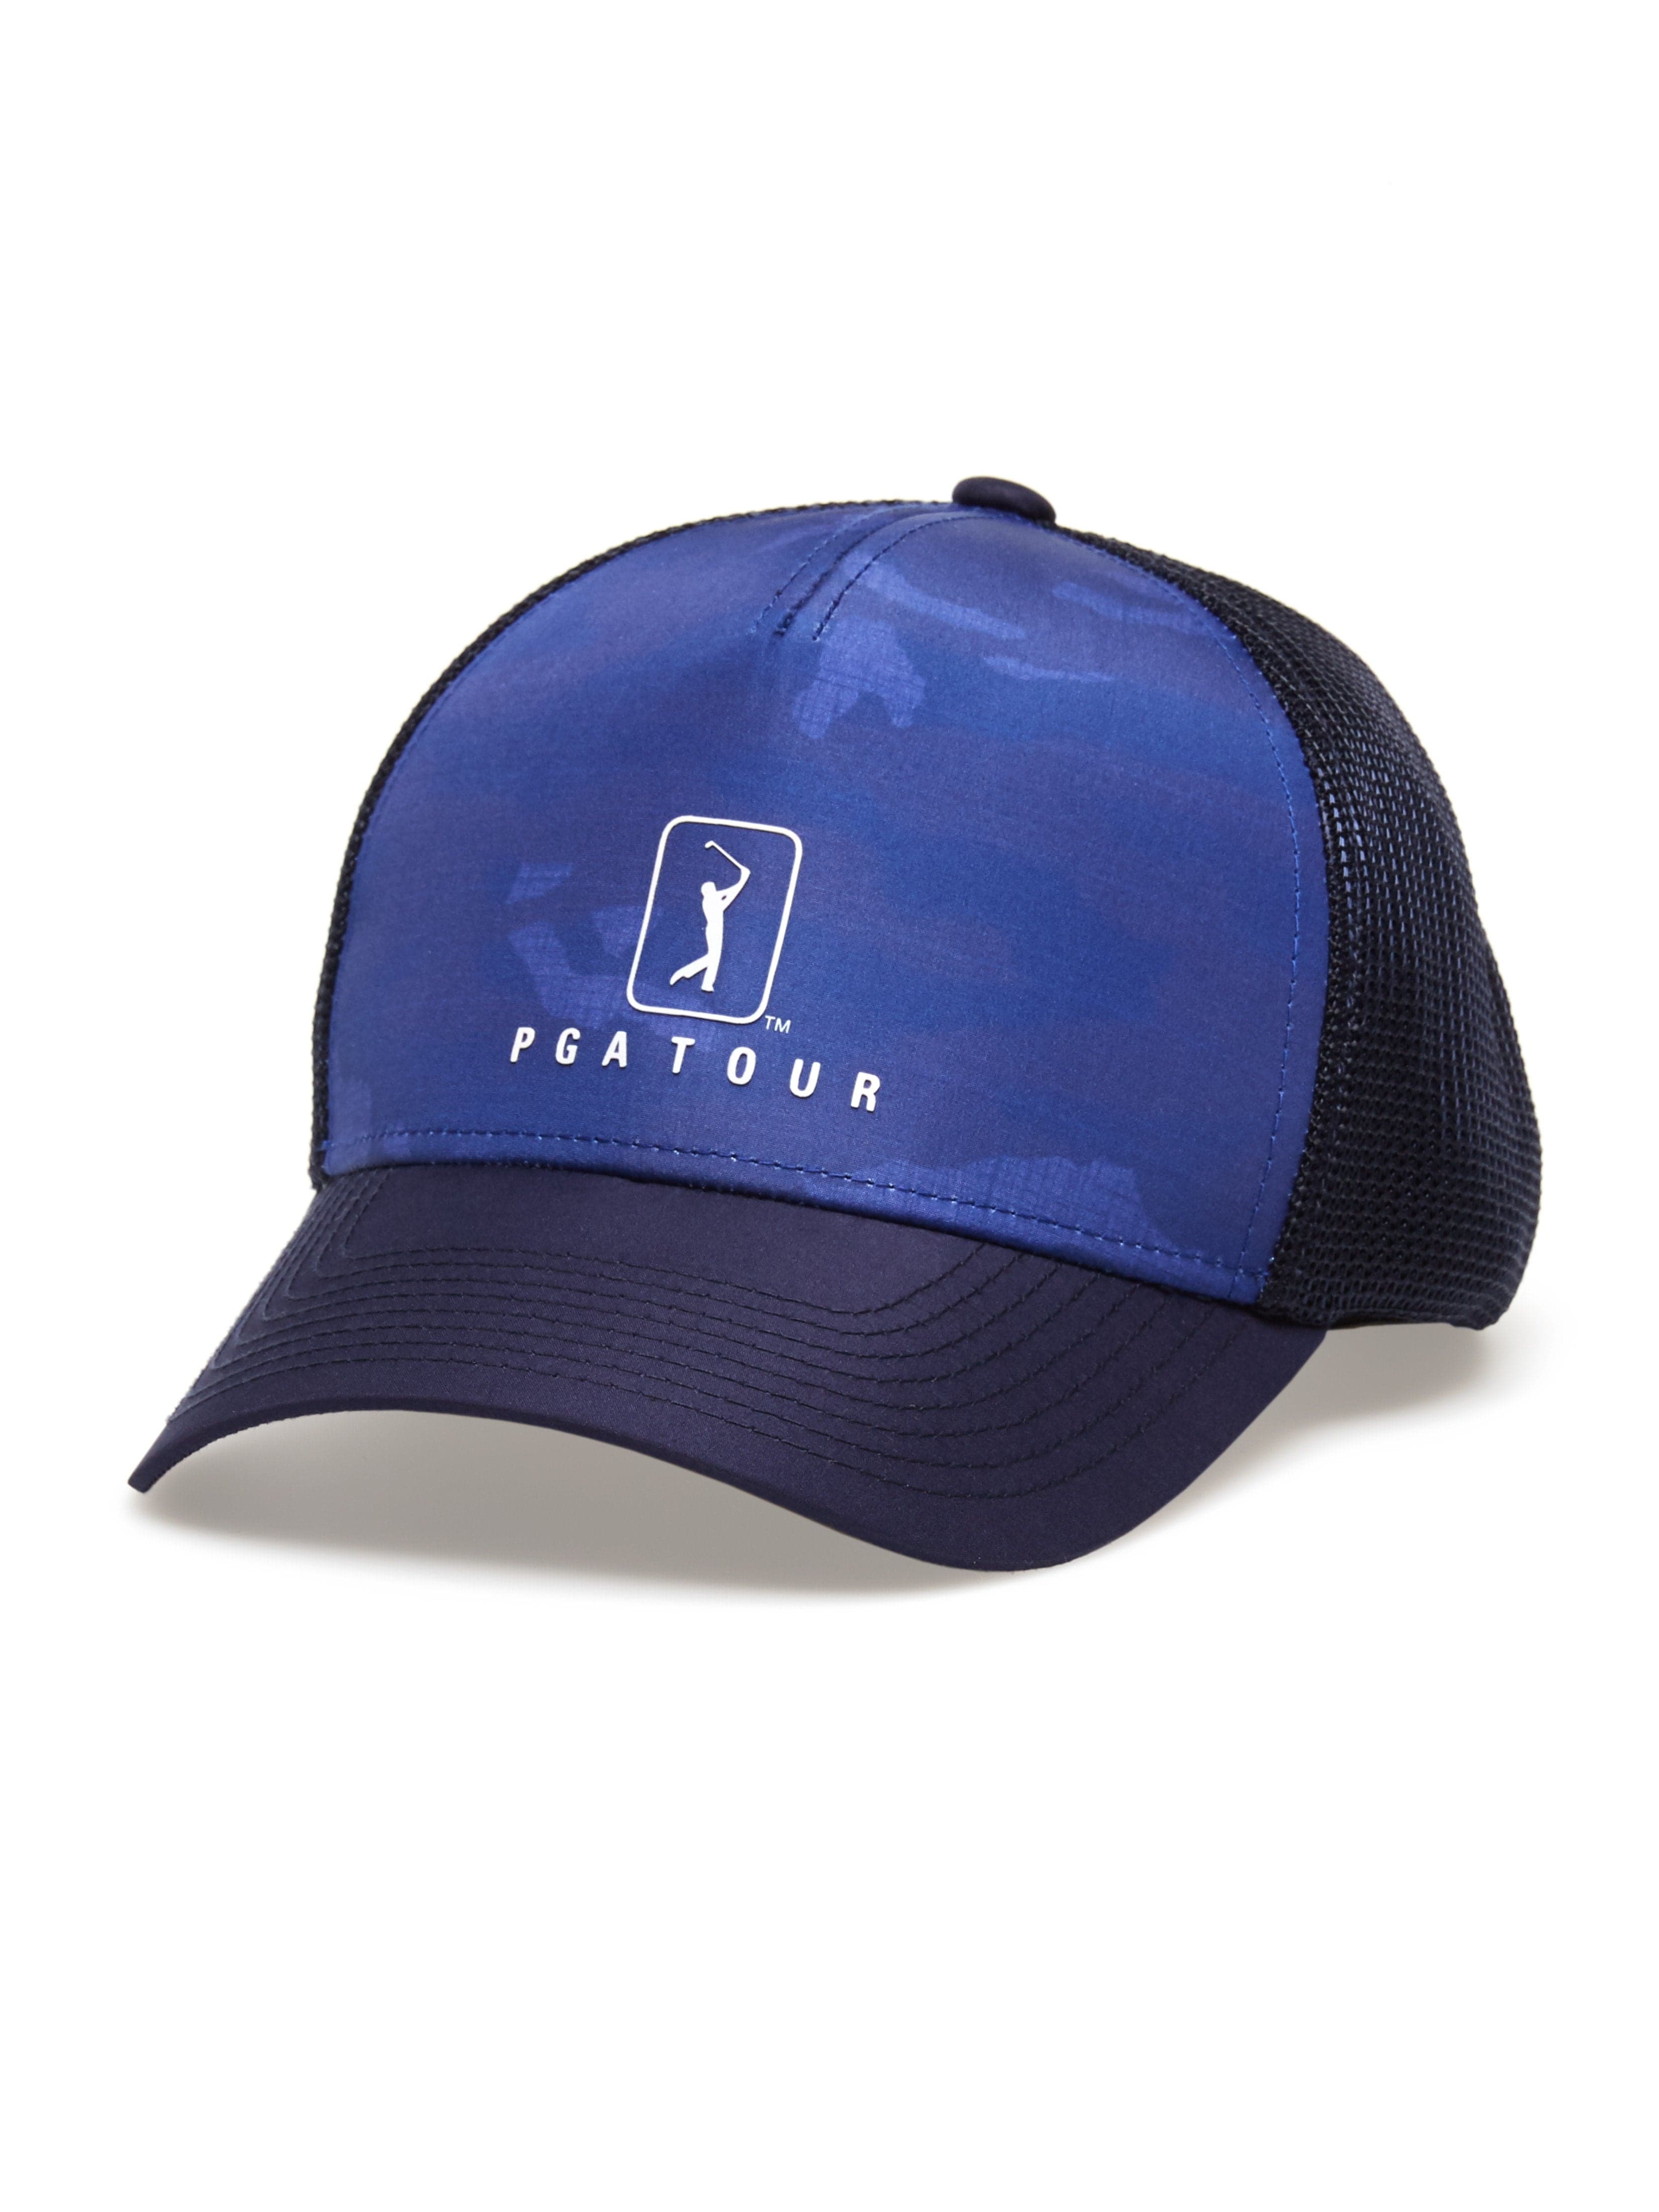 PGA TOUR Apparel Mens Camo Trucker Hat, Navy Blue, 100% Polyester | Golf Apparel Shop